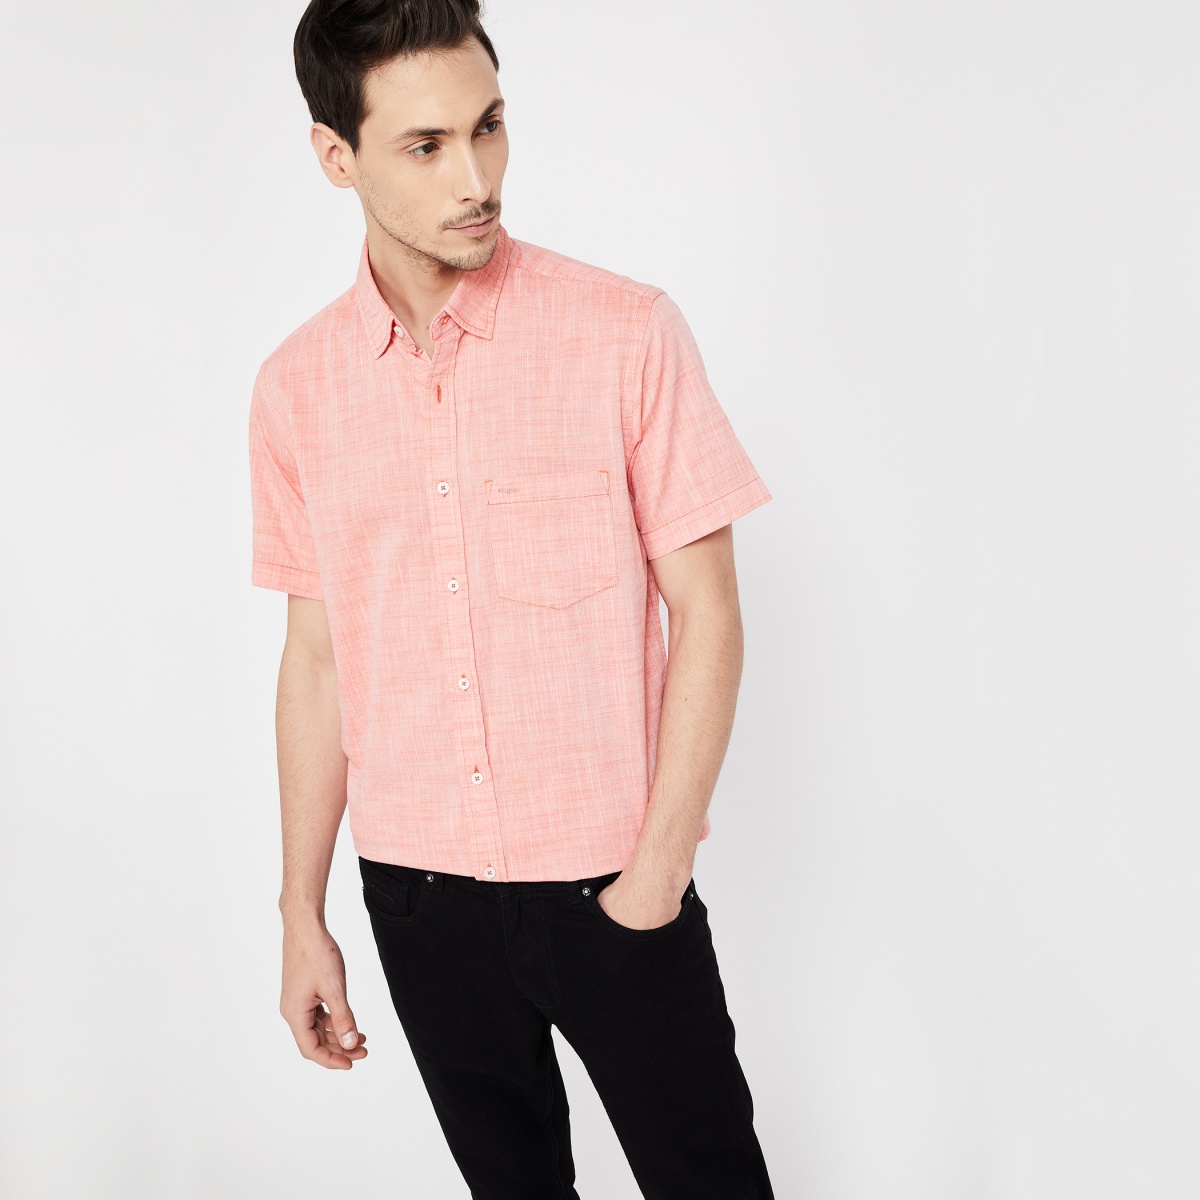 COLORPLUS Slim Fit Yarn Dyed Short-Sleeve Shirt